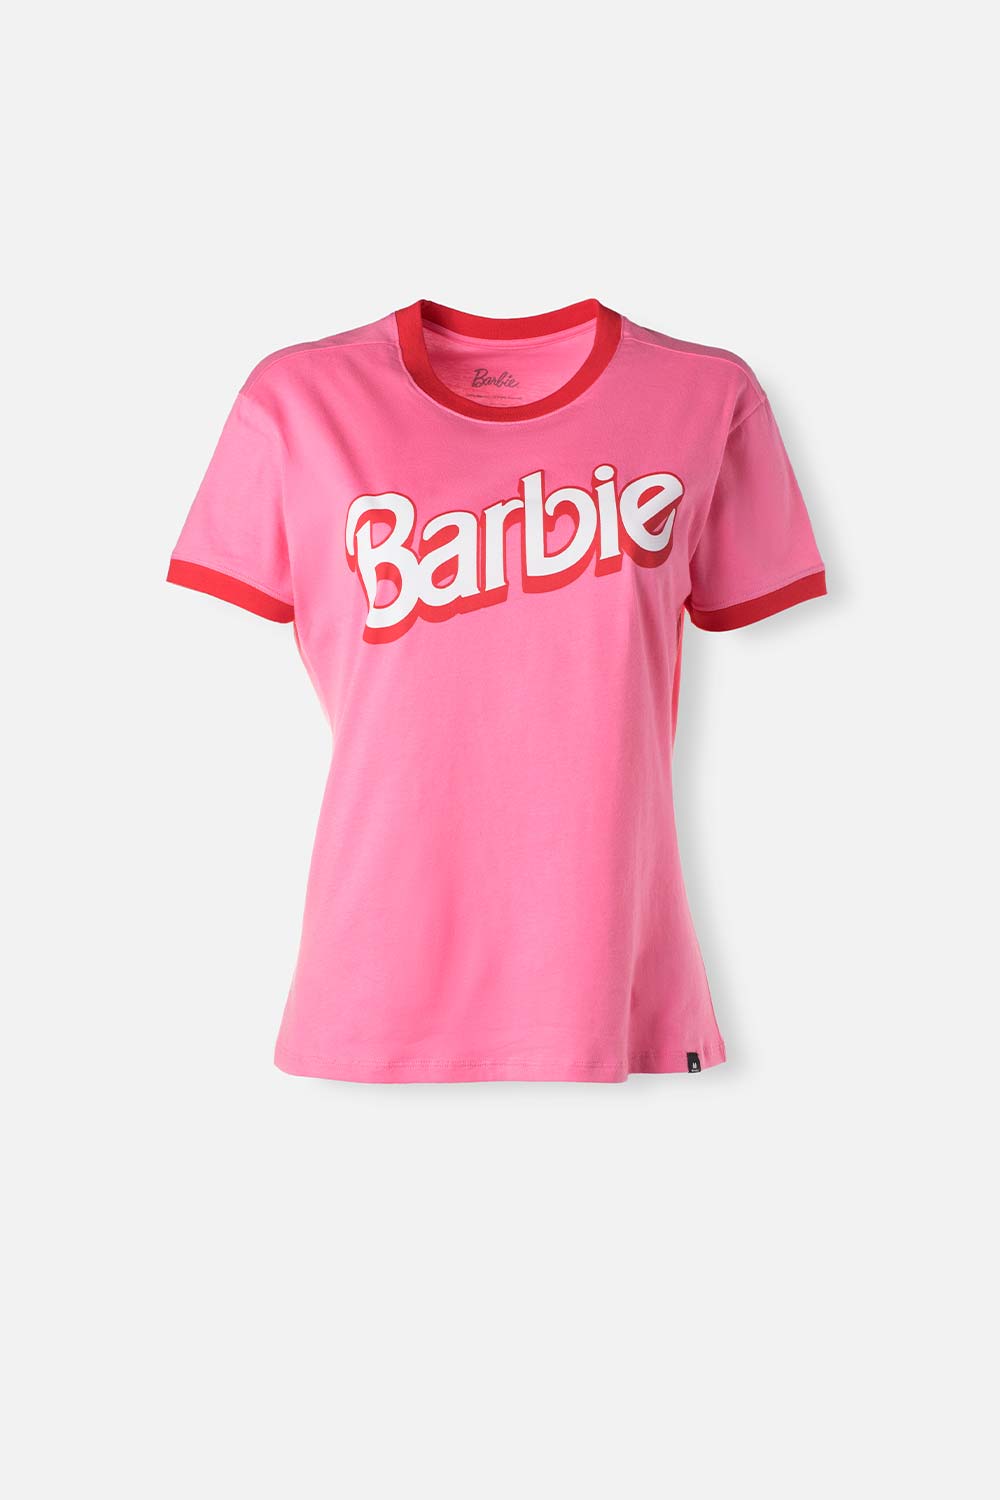 Camiseta de Barbie rosada manga corta para mujer - MoviesShop